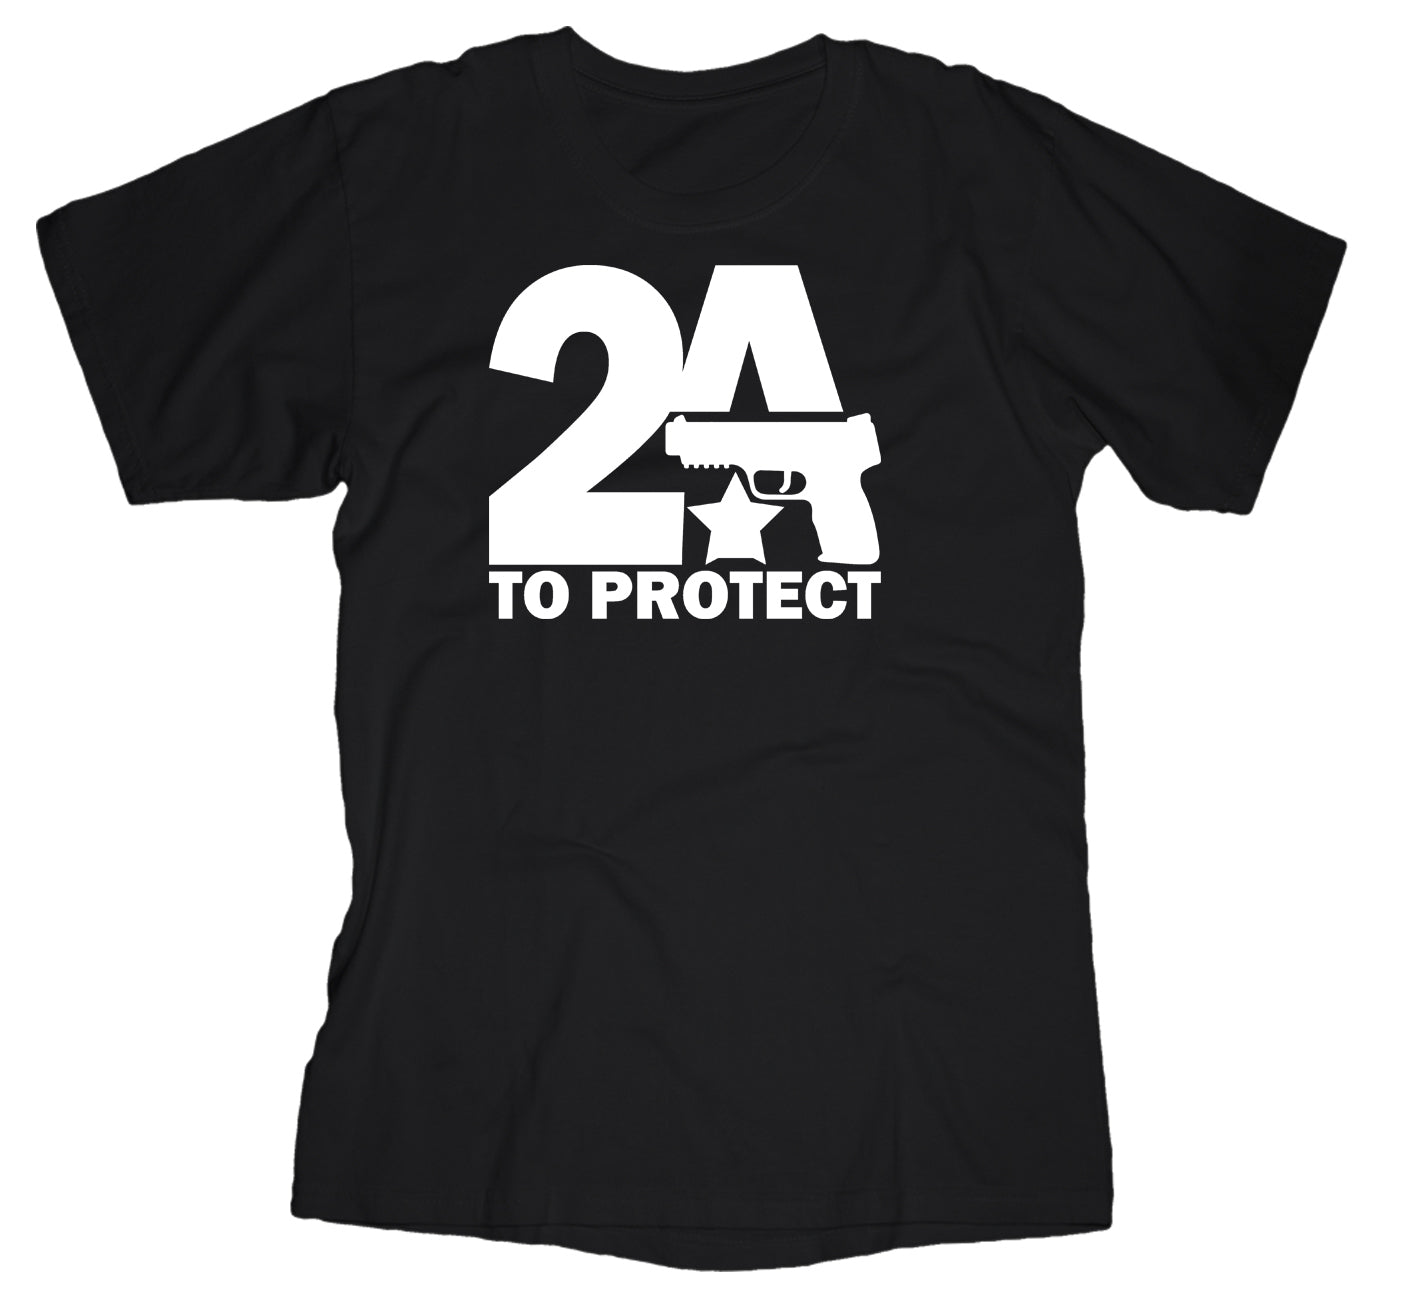 2nd Amendment Shirt Black Round Neck